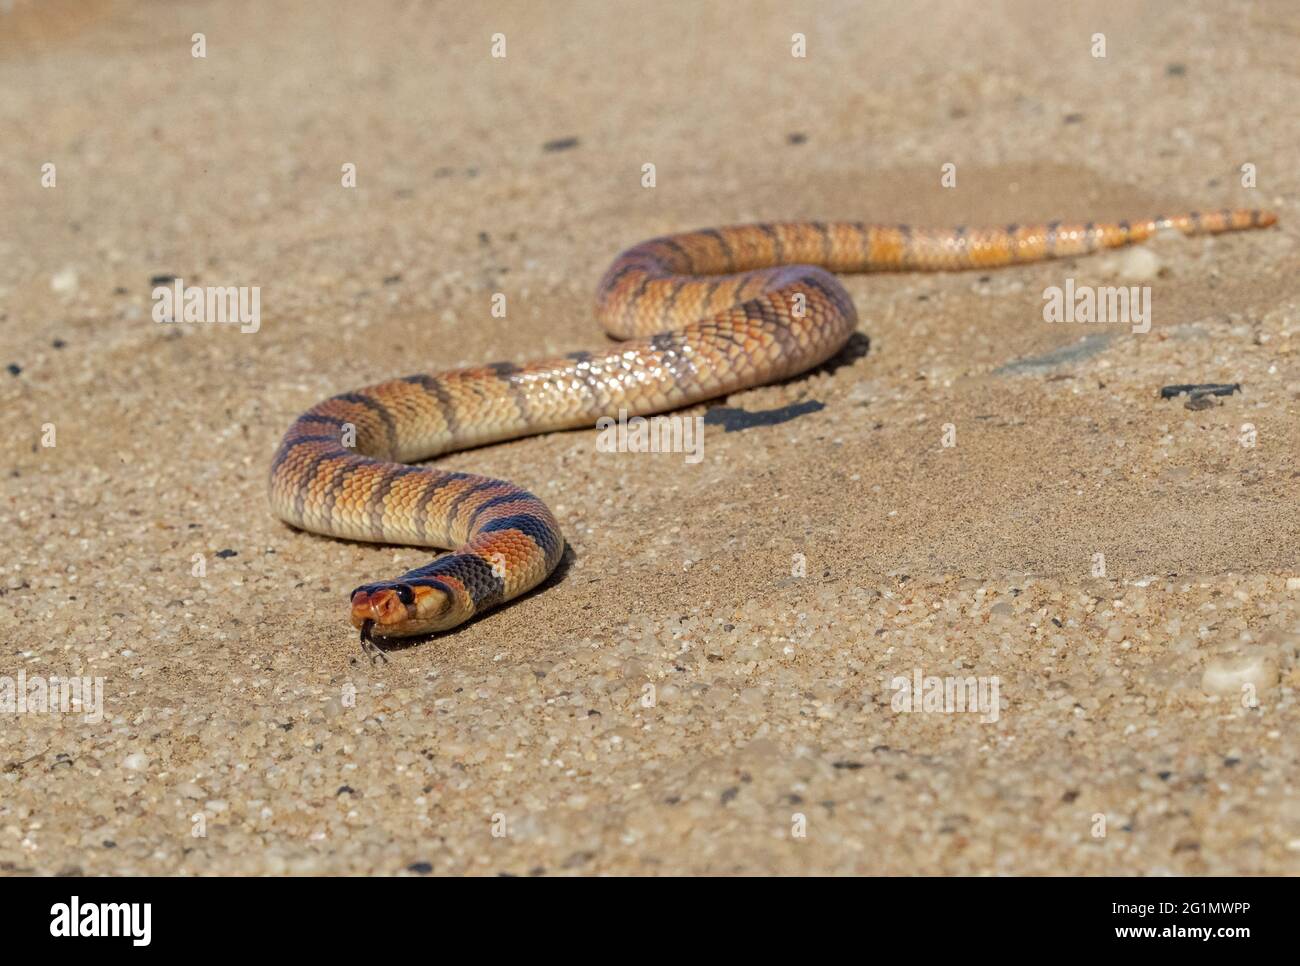 Namibia, Swakopmund, Dorob National Park, Coral Snake (Aspidelaps lubricus lubricus) Stock Photo